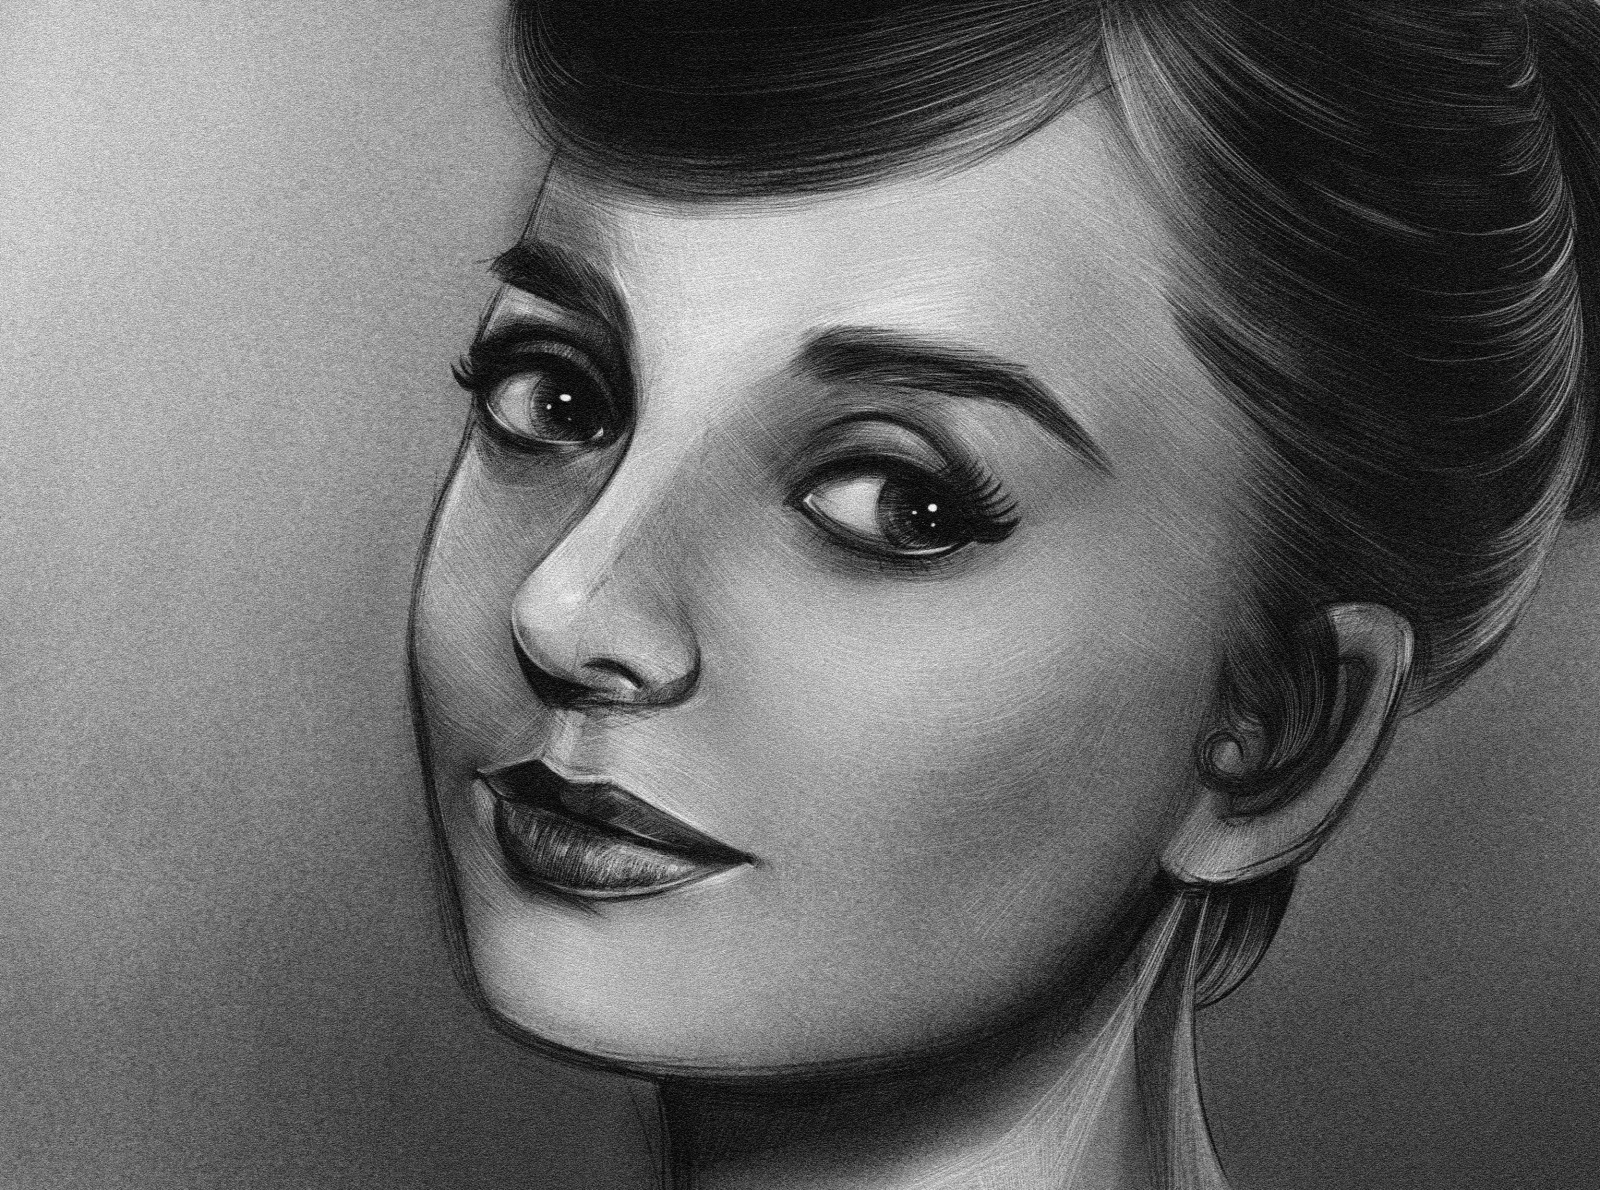 Audrey Hepburn actress audrey audrey hepburn character drawing goldenhollywood illustration painting photostudy portrait illustration woman